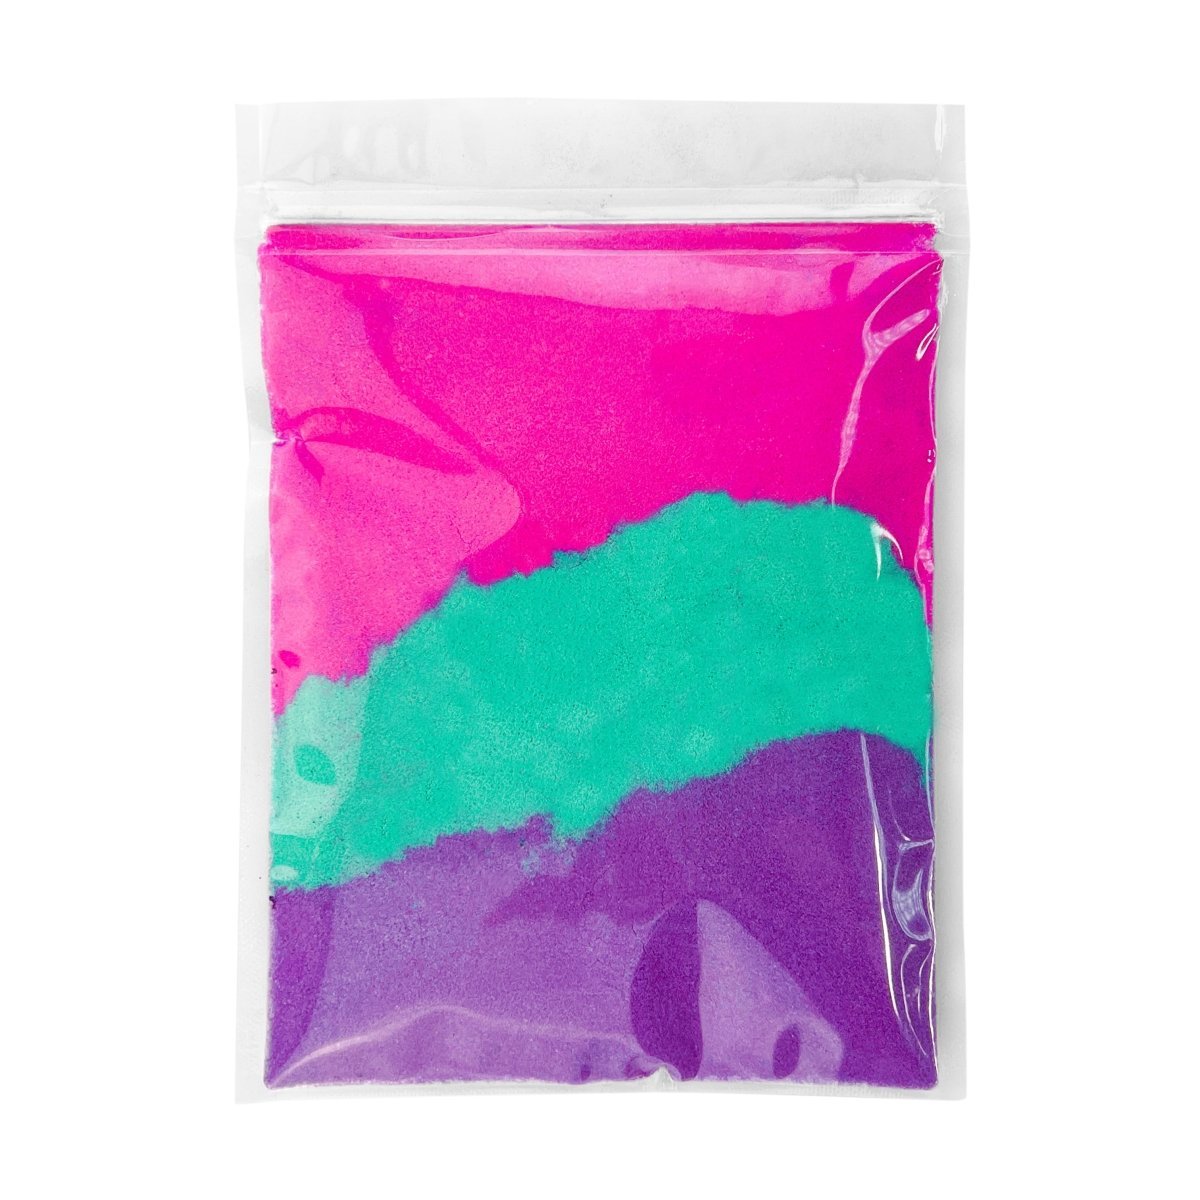 Amethyst Bath Dust for Kids & Adults - Colourful Glitters & Berry Blast Fragrance - Made in Australia by Bath Box